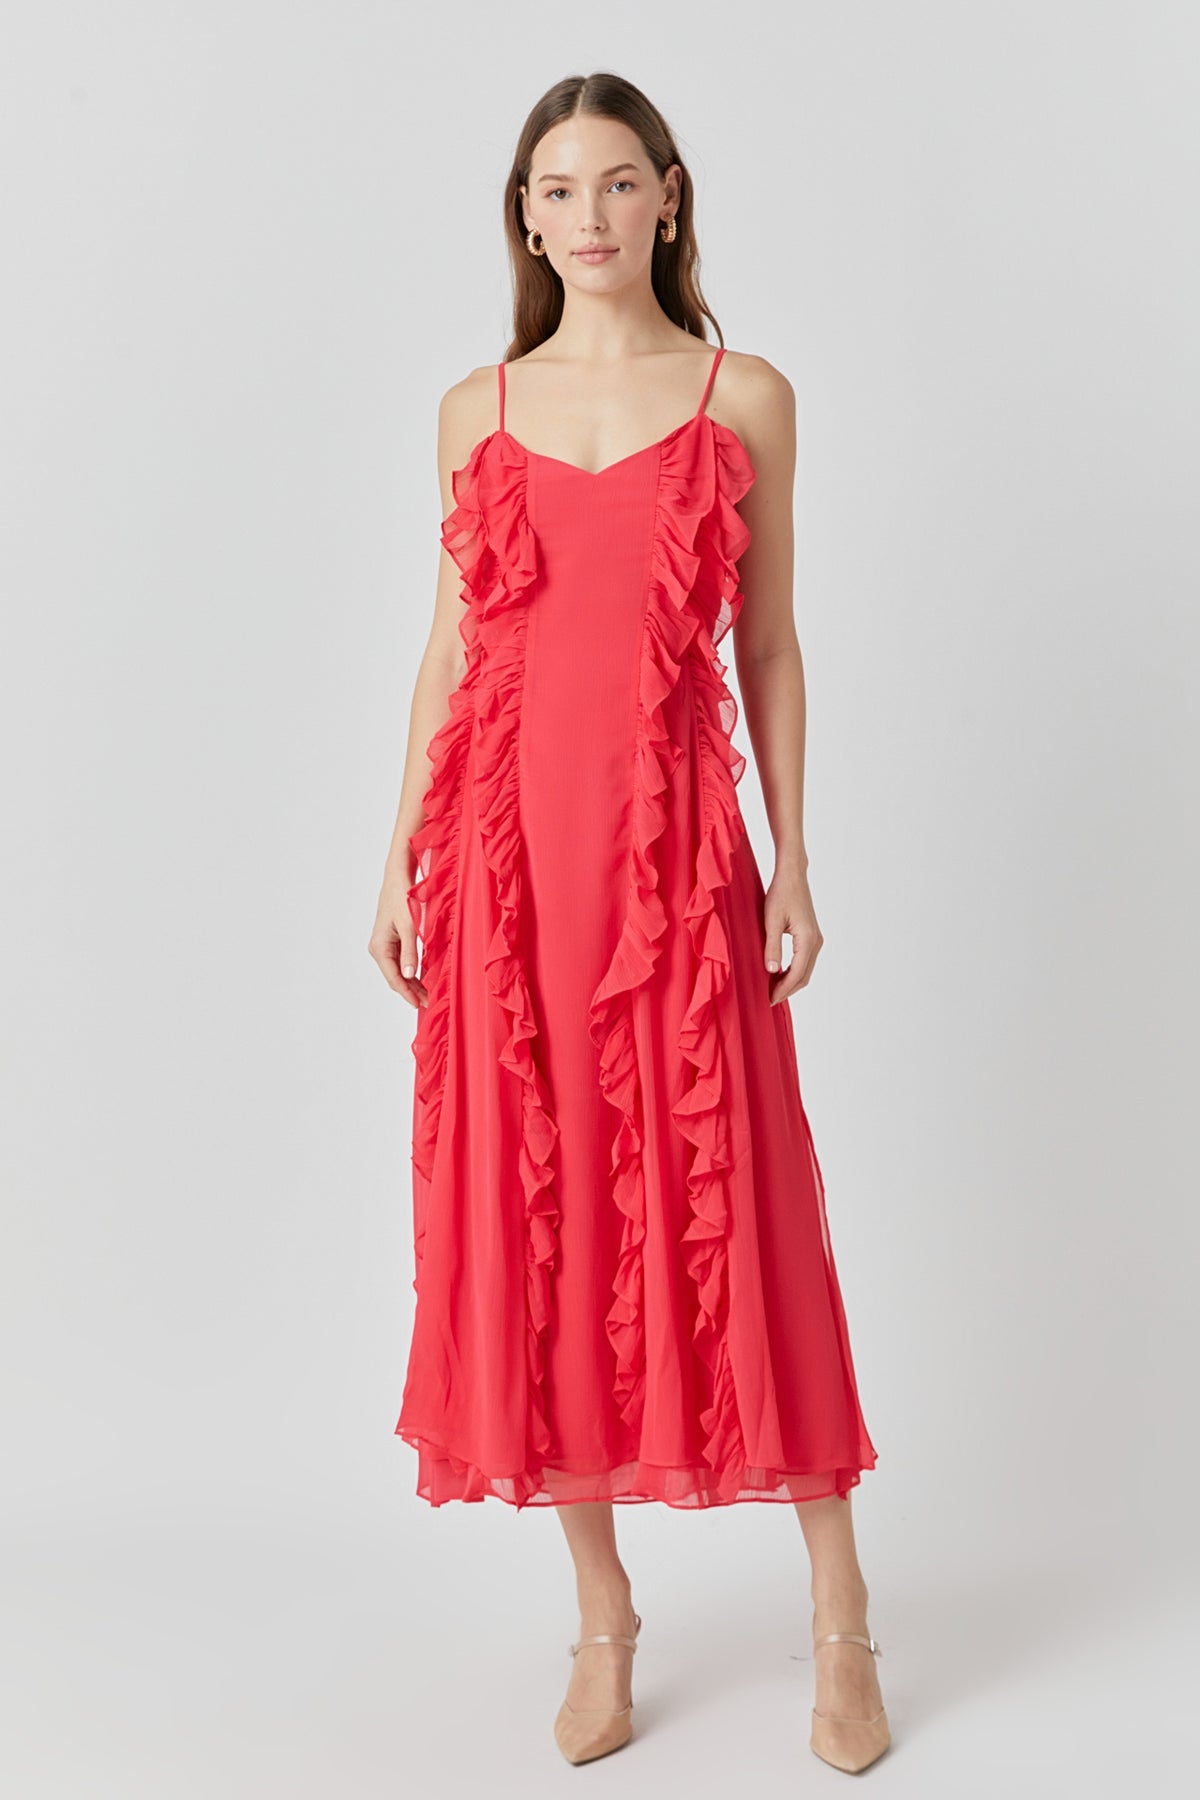 ENDLESS ROSE - Chiffon Ruffled Spaghetti Maxi Dress - DRESSES available at Objectrare